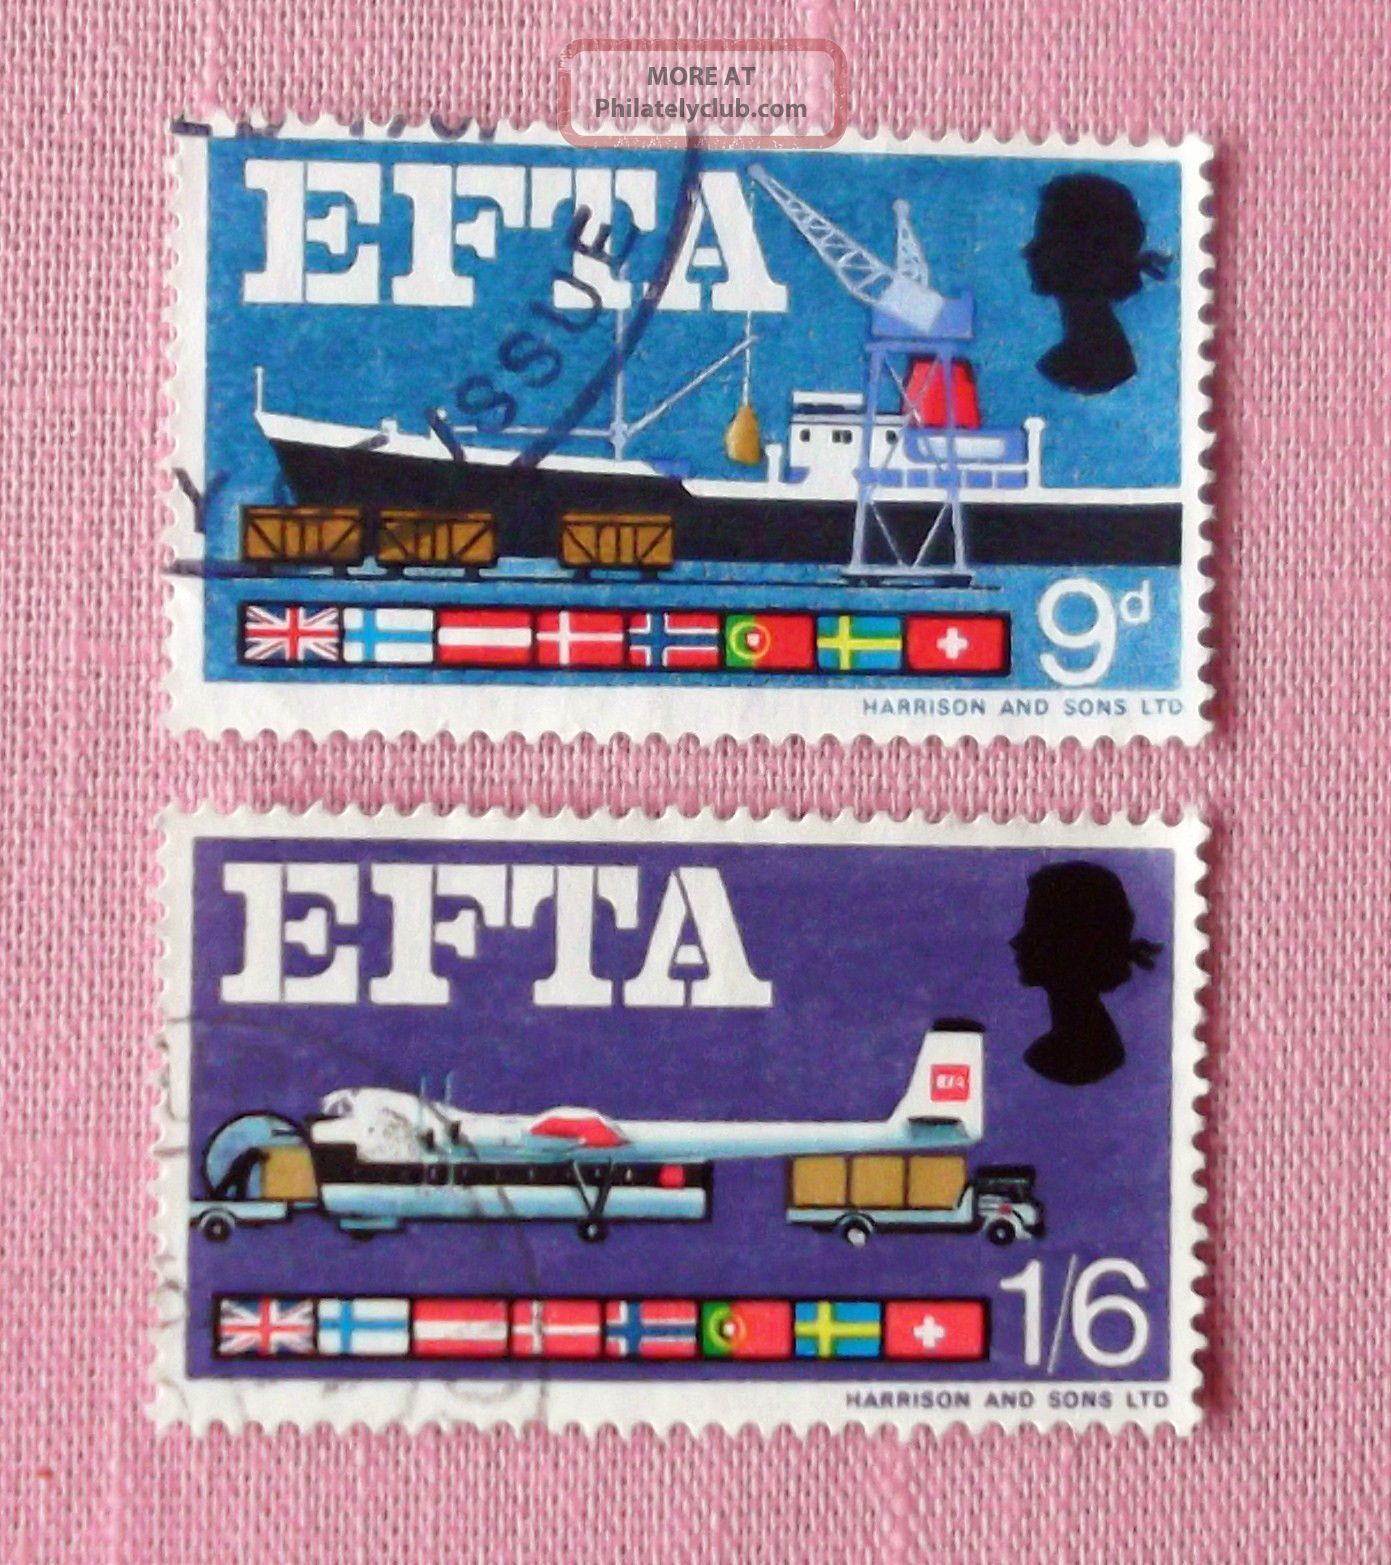 Qe Com - European Trade Association (efta) - 20/2/1967 - Good Elizabeth II photo